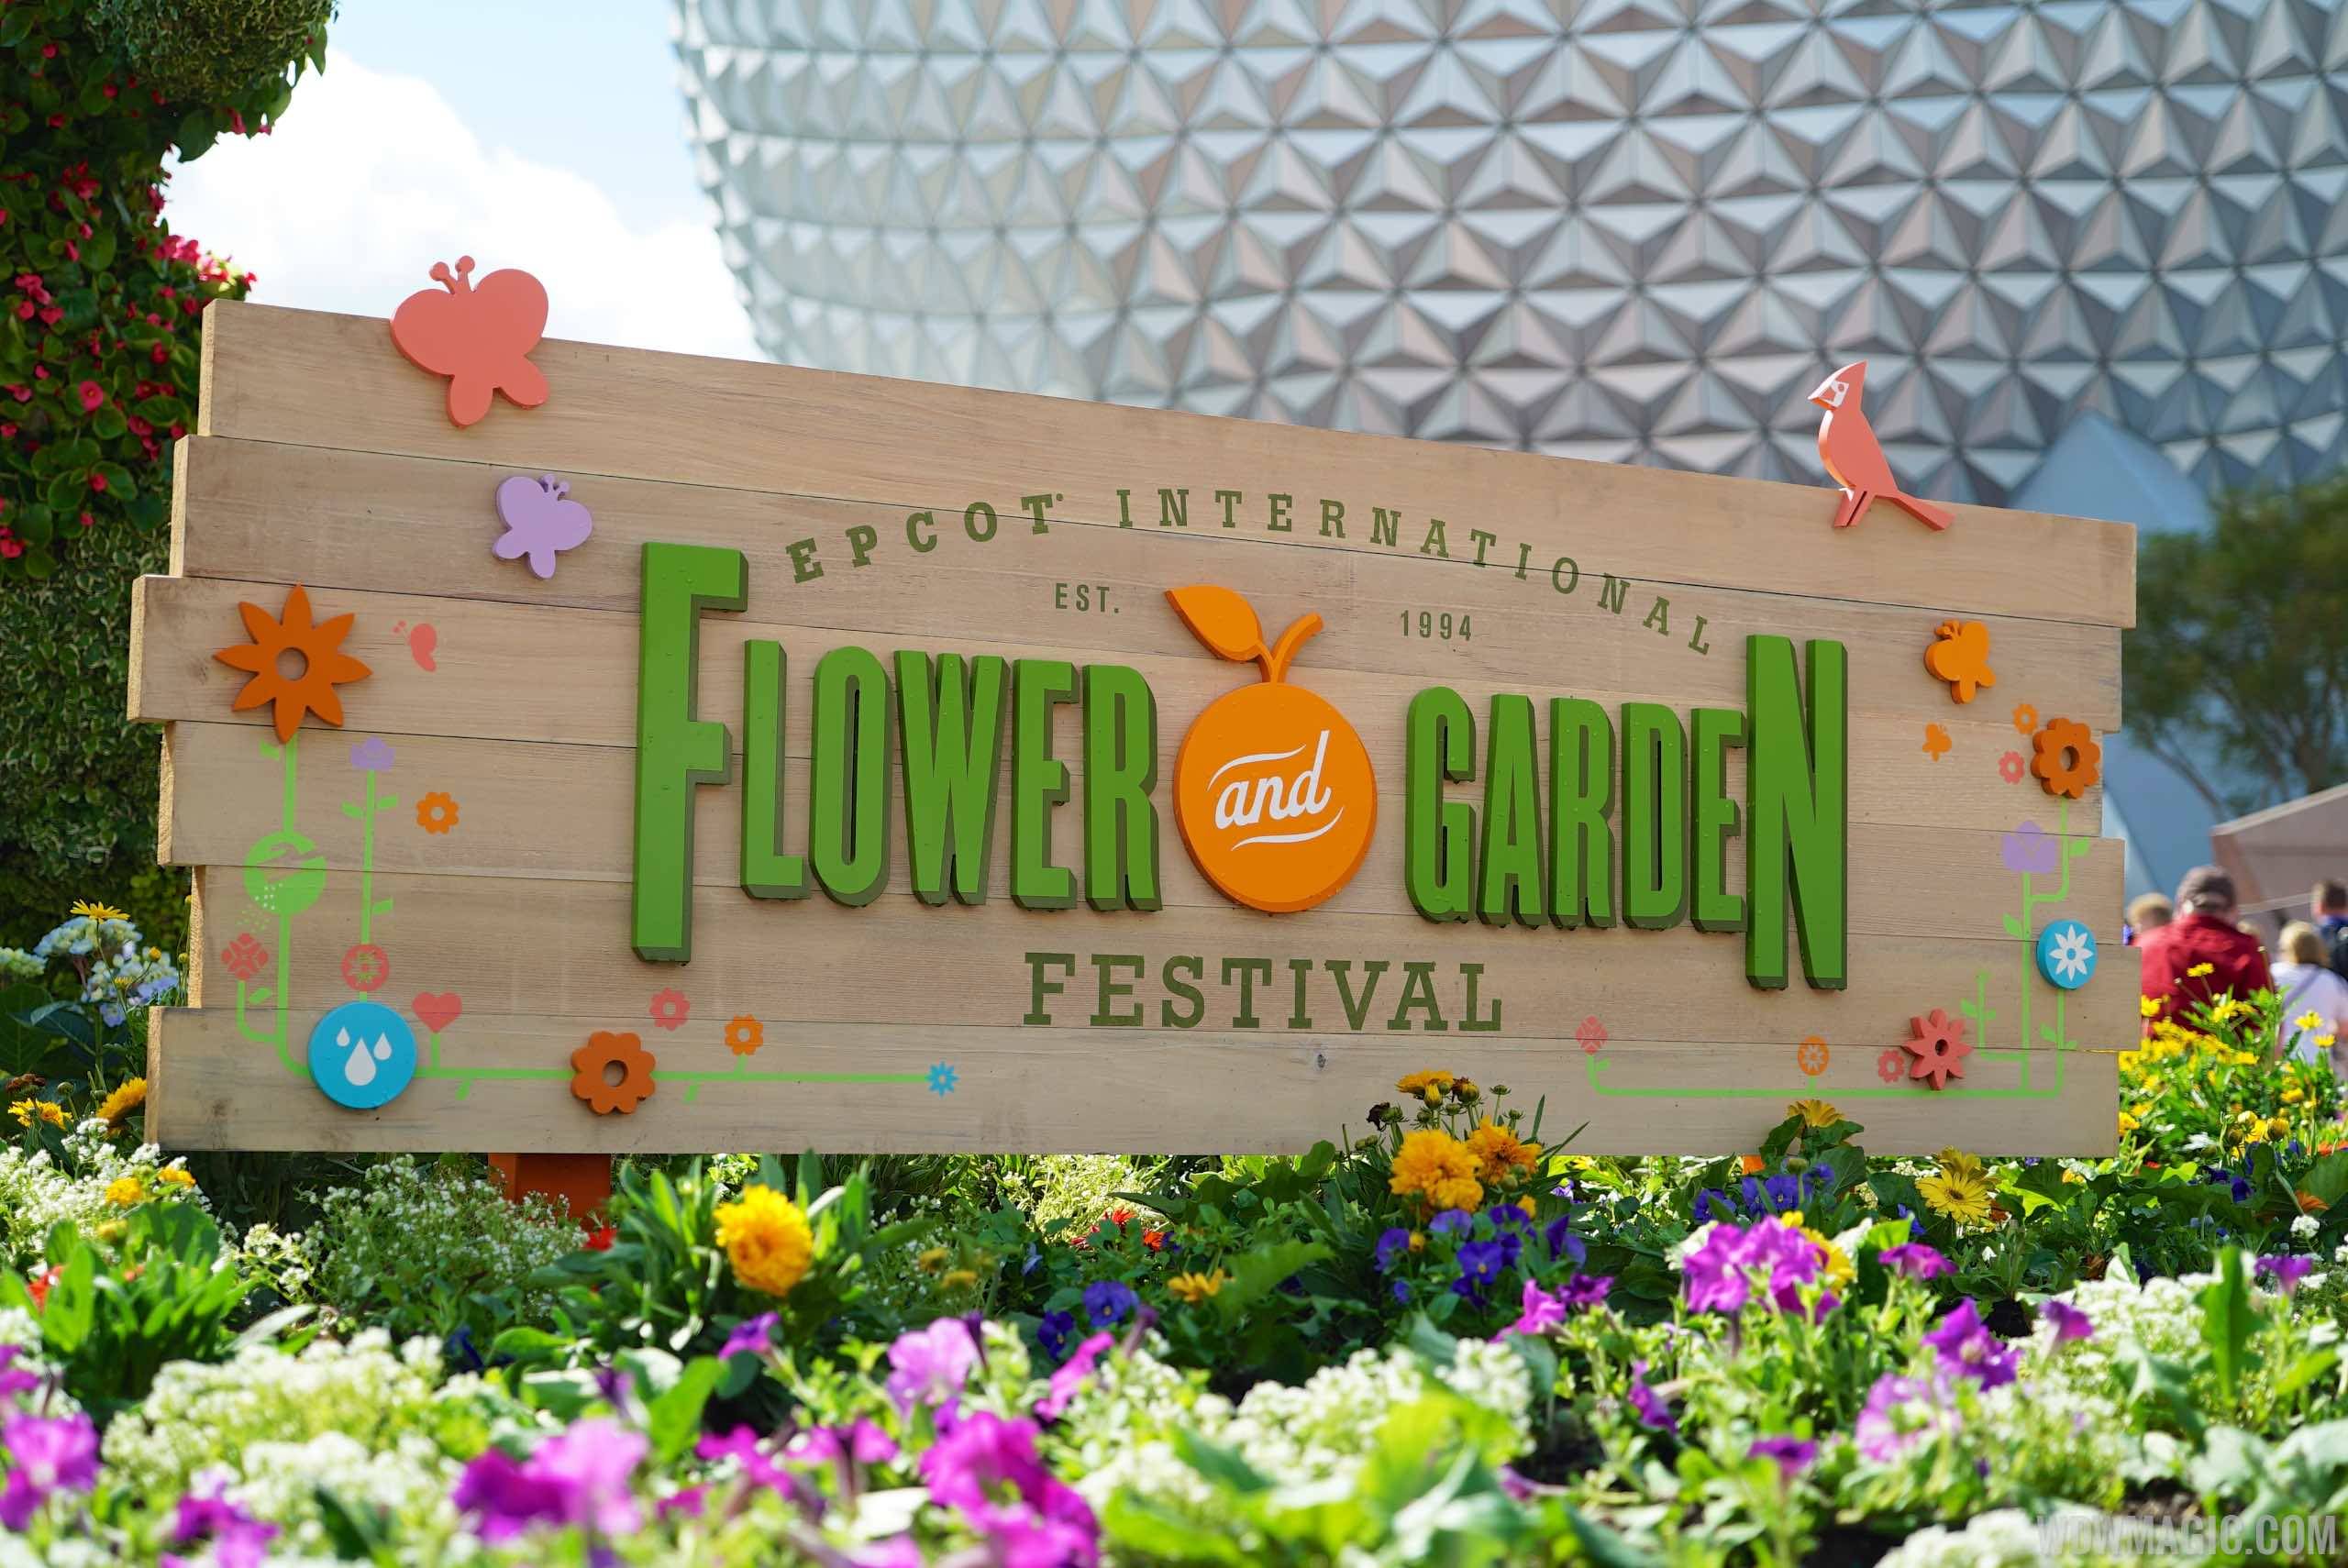 2015 Epcot Flower and Garden Festival - Main entrance sign